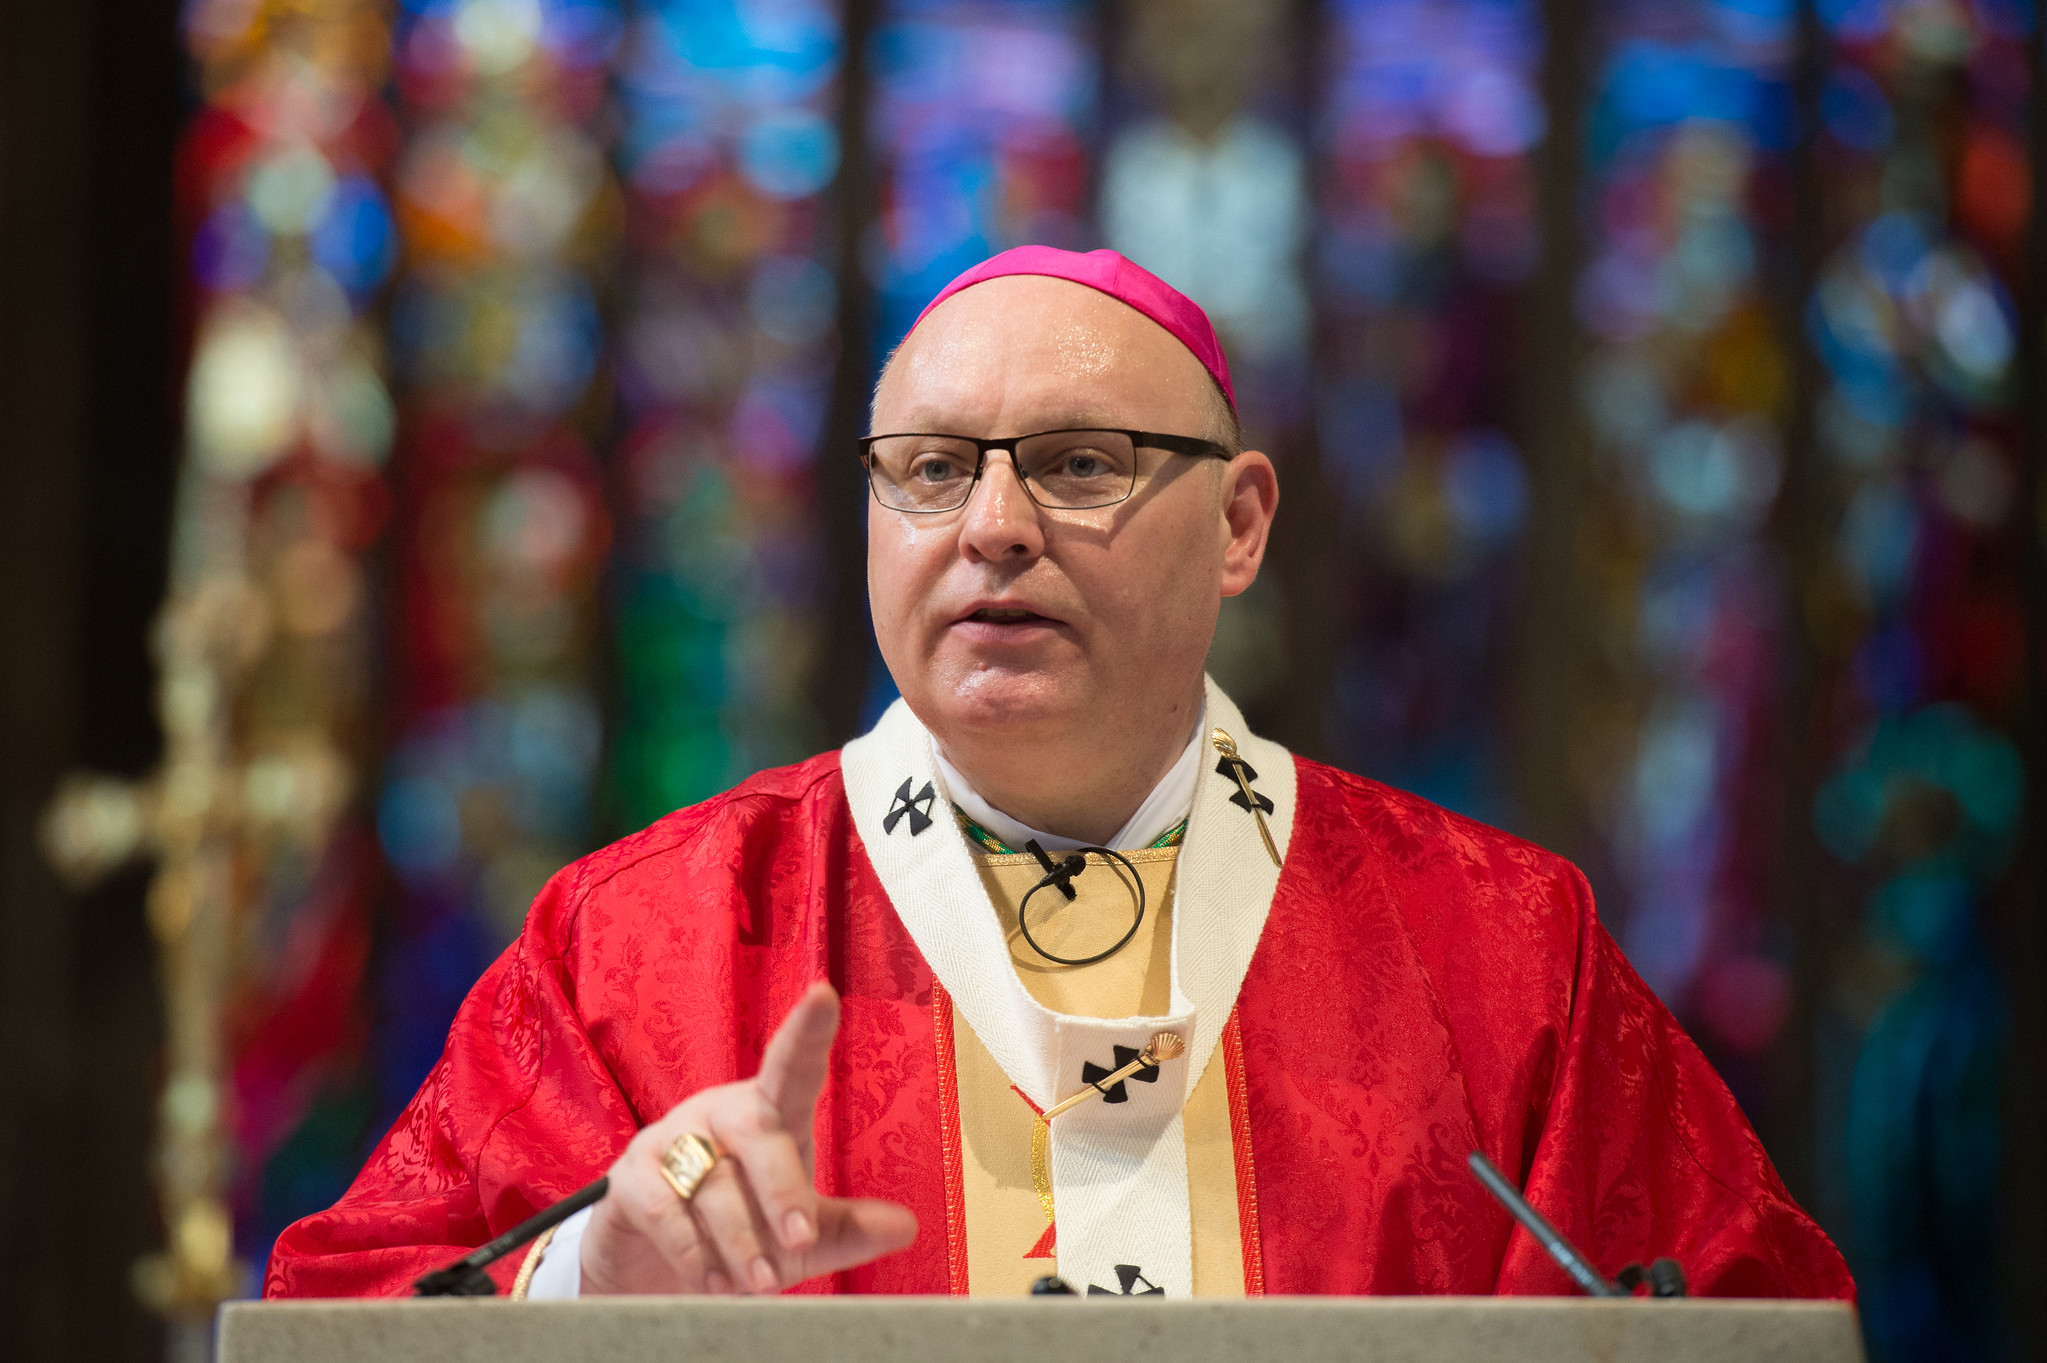 Archbishop John Wilson – Photo by © Mazur/catholicnews.org.uk